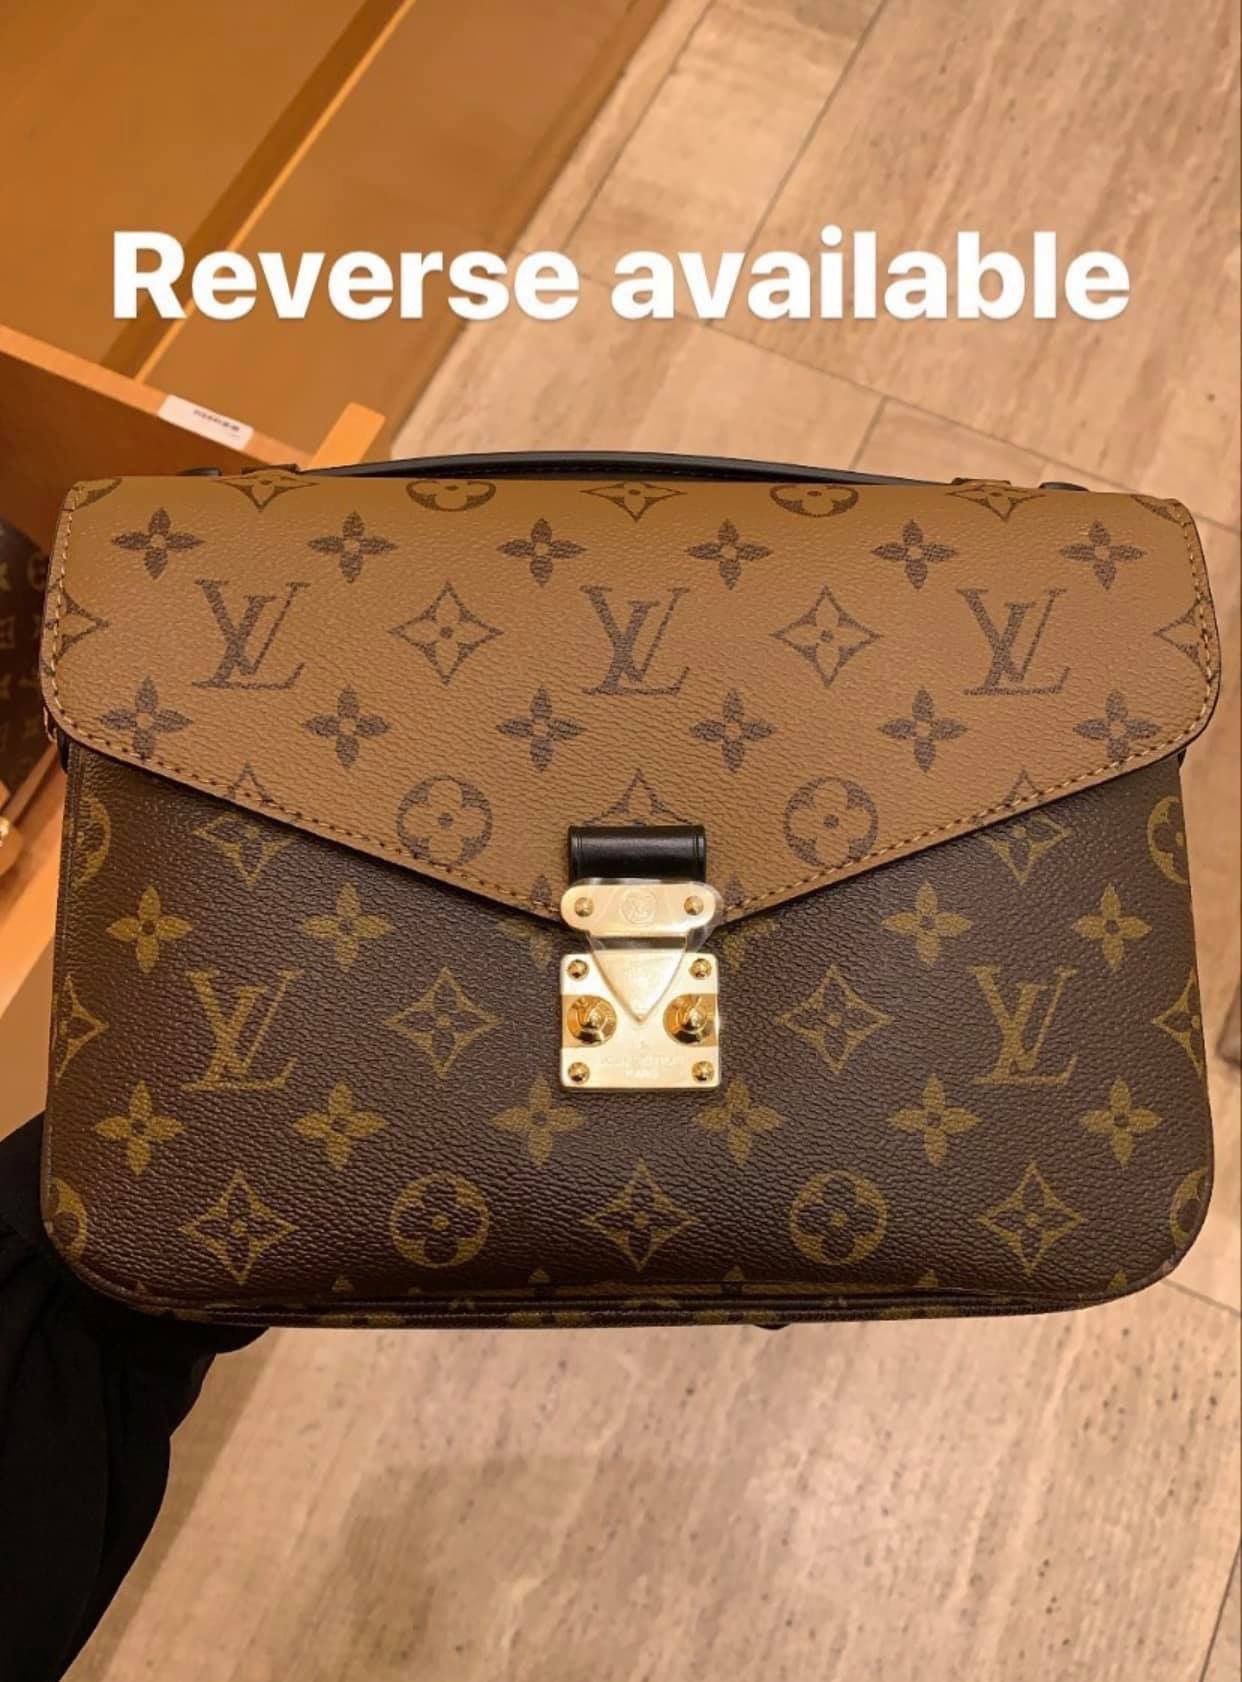 Gucci, Louis Vuitton brand